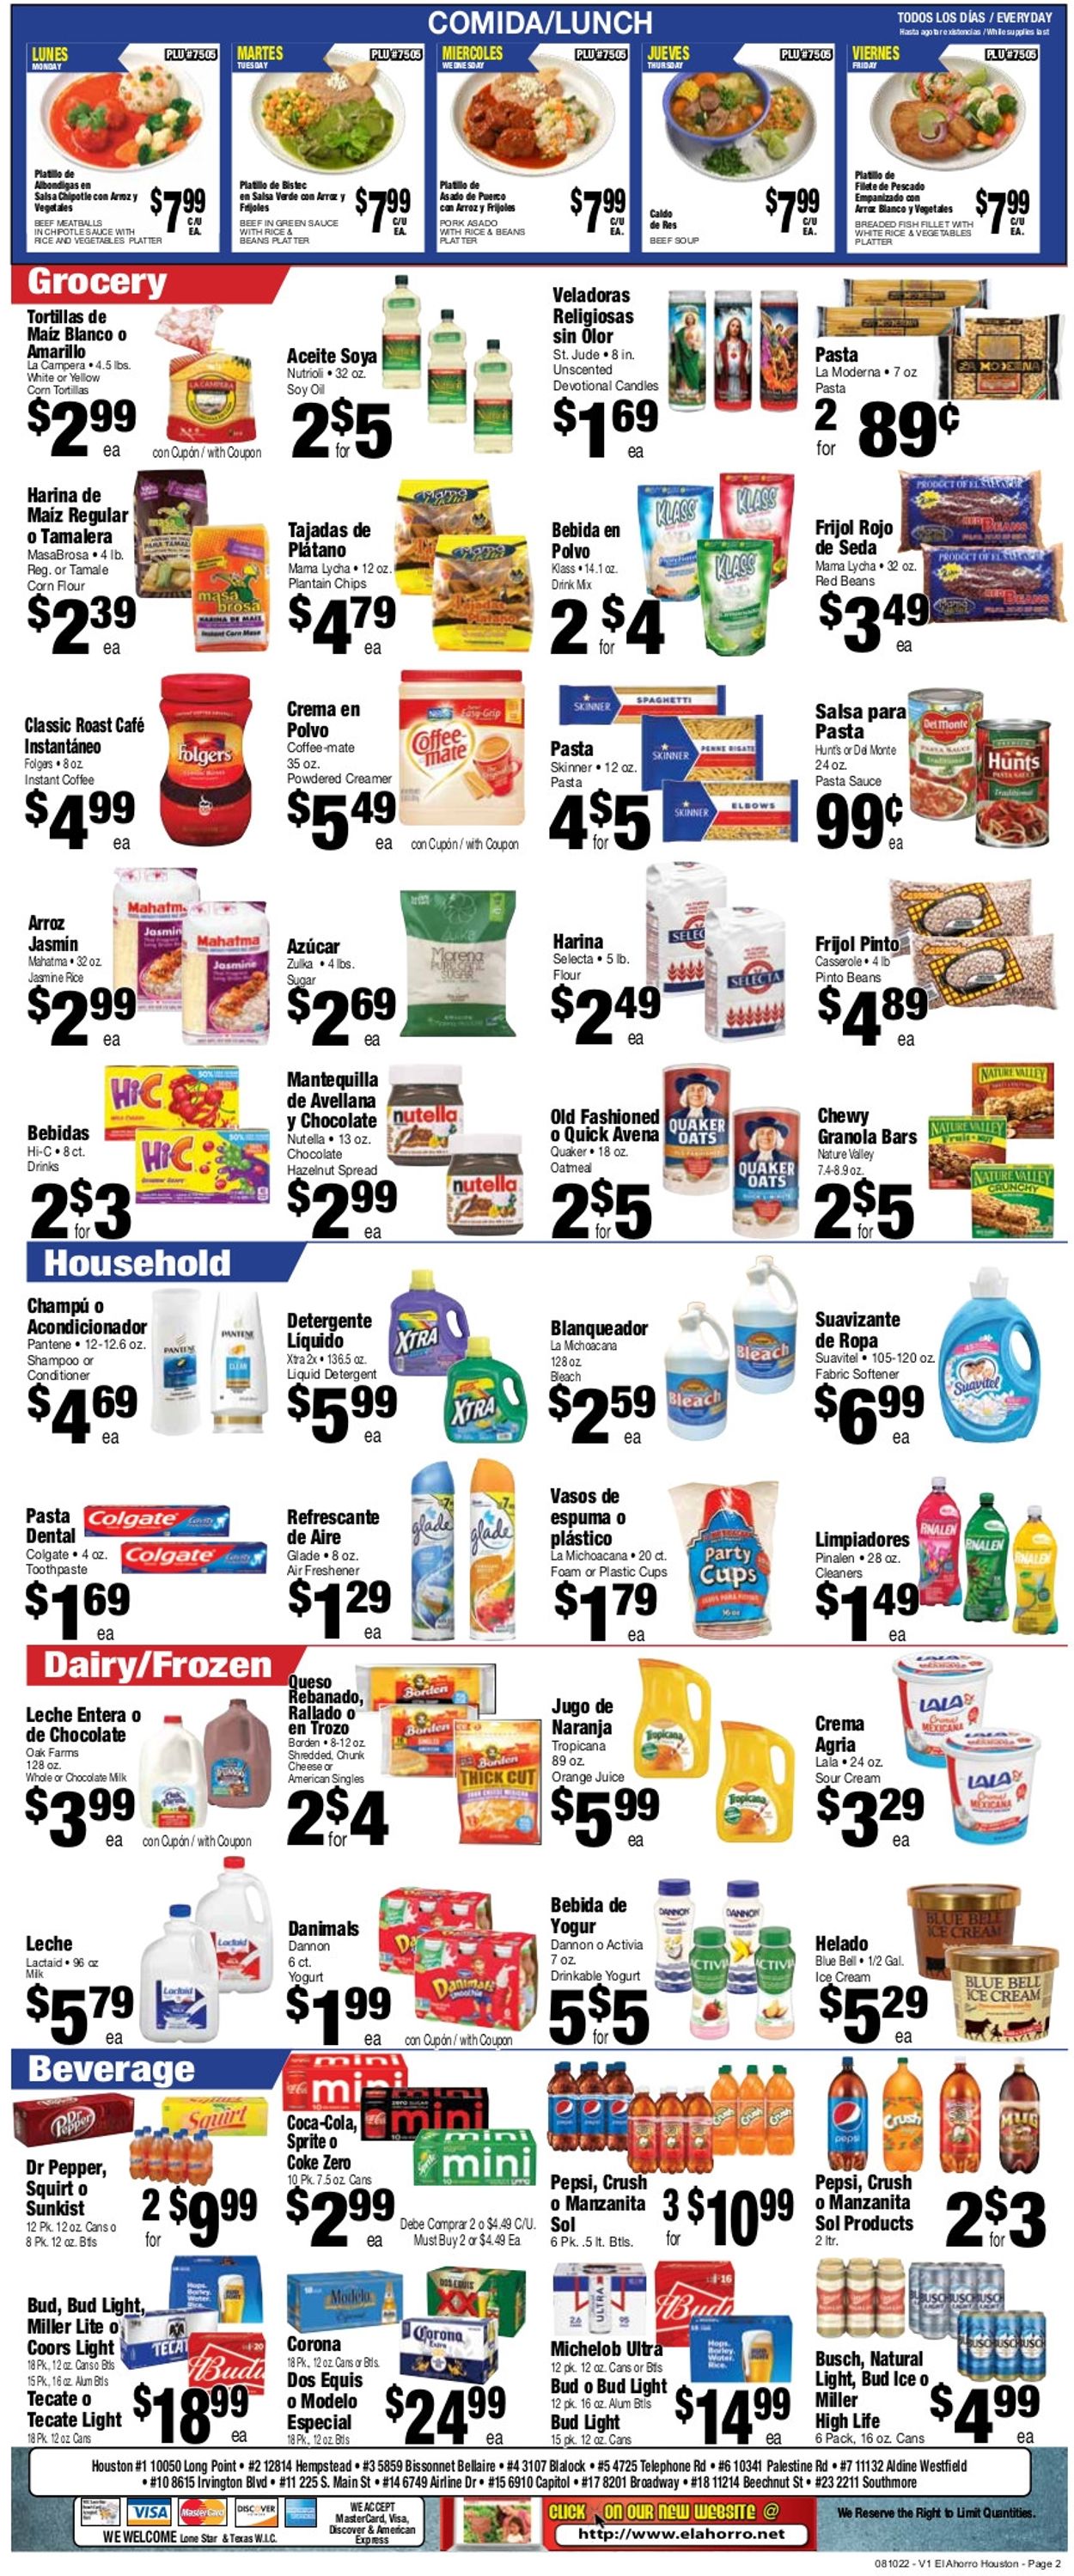 Catalogue El Ahorro Supermarket from 08/10/2022